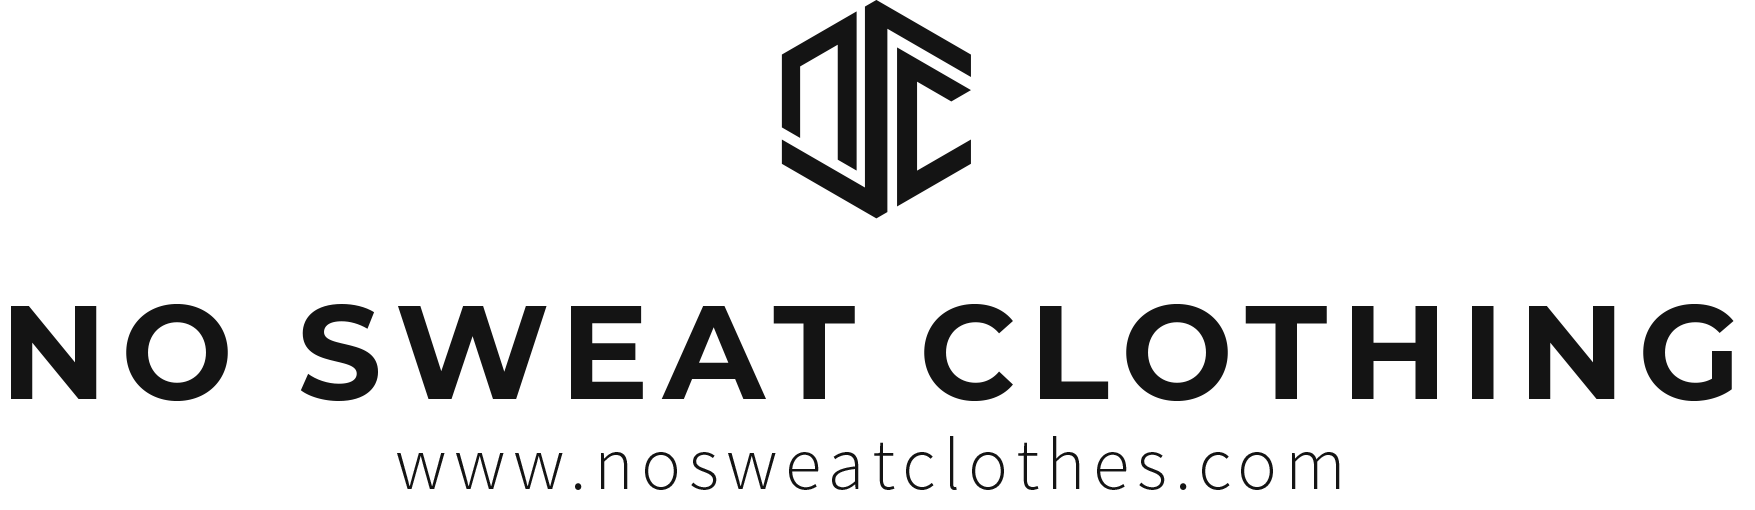 No Sweat Clothing